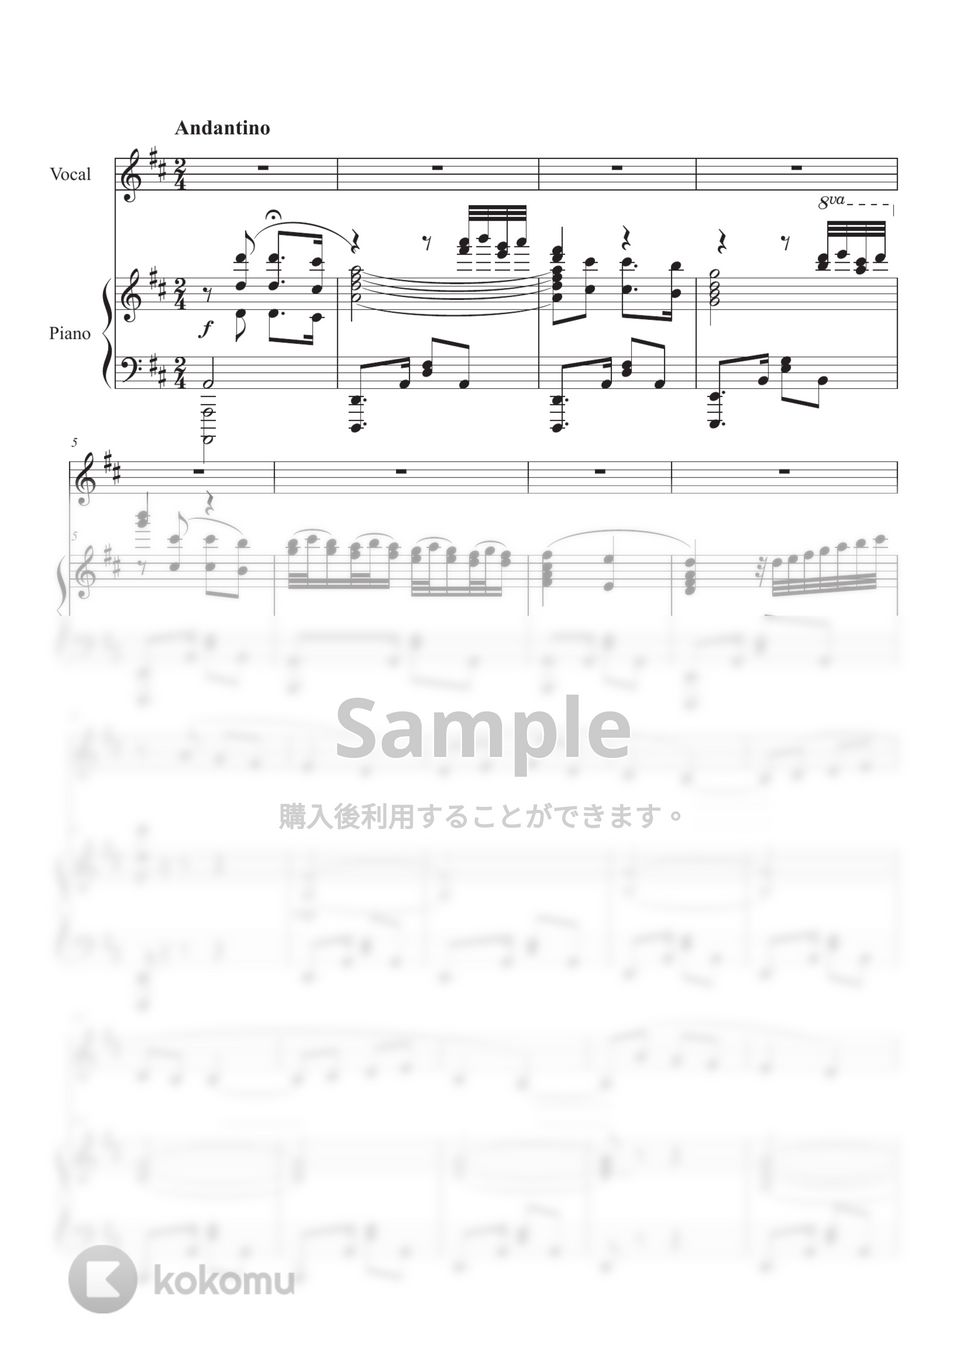 O sole mio（私の太陽）豪華伴奏版（歌パート譜、ピアノパート譜付き） (豪華な伴奏 / 豪華版上級者向けピアノ伴奏 / ピアノ弾き語り楽譜) by コギト